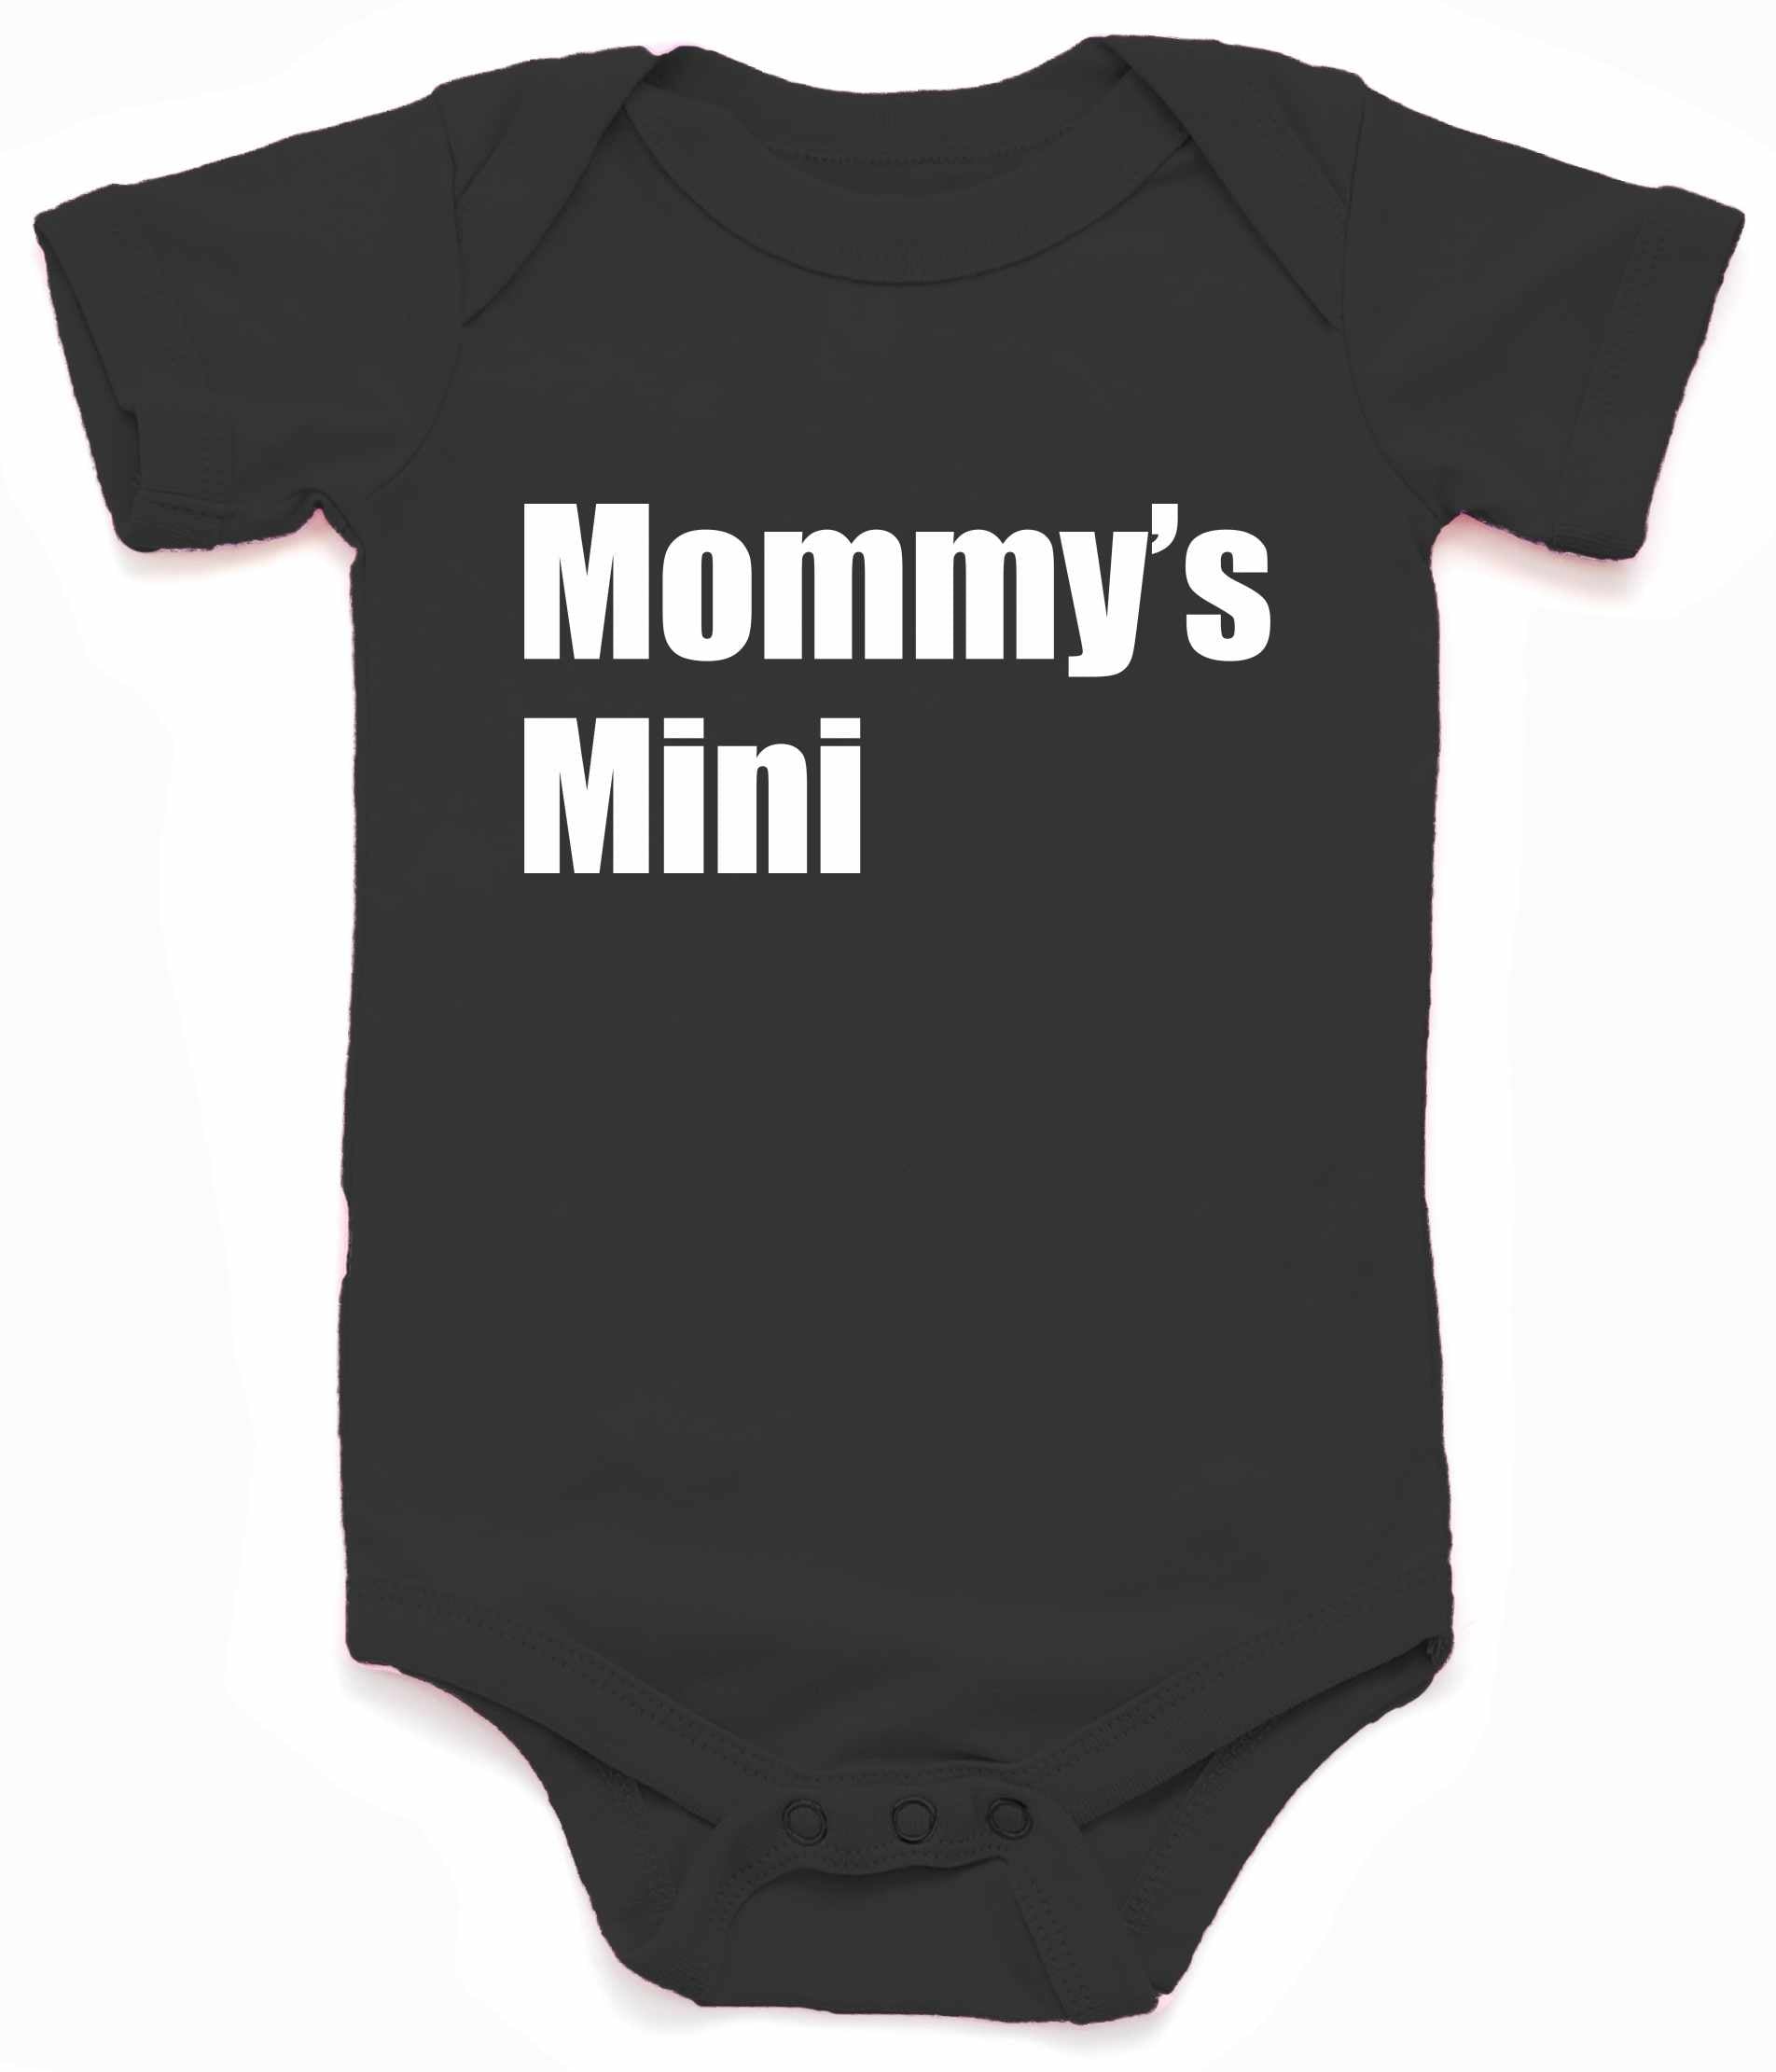 Mommy's Mini Infant BodySuit - Black / NewBorn - Black / 6 Month - Black / 12 Month - Black / 18 Month - Black / 24 Month